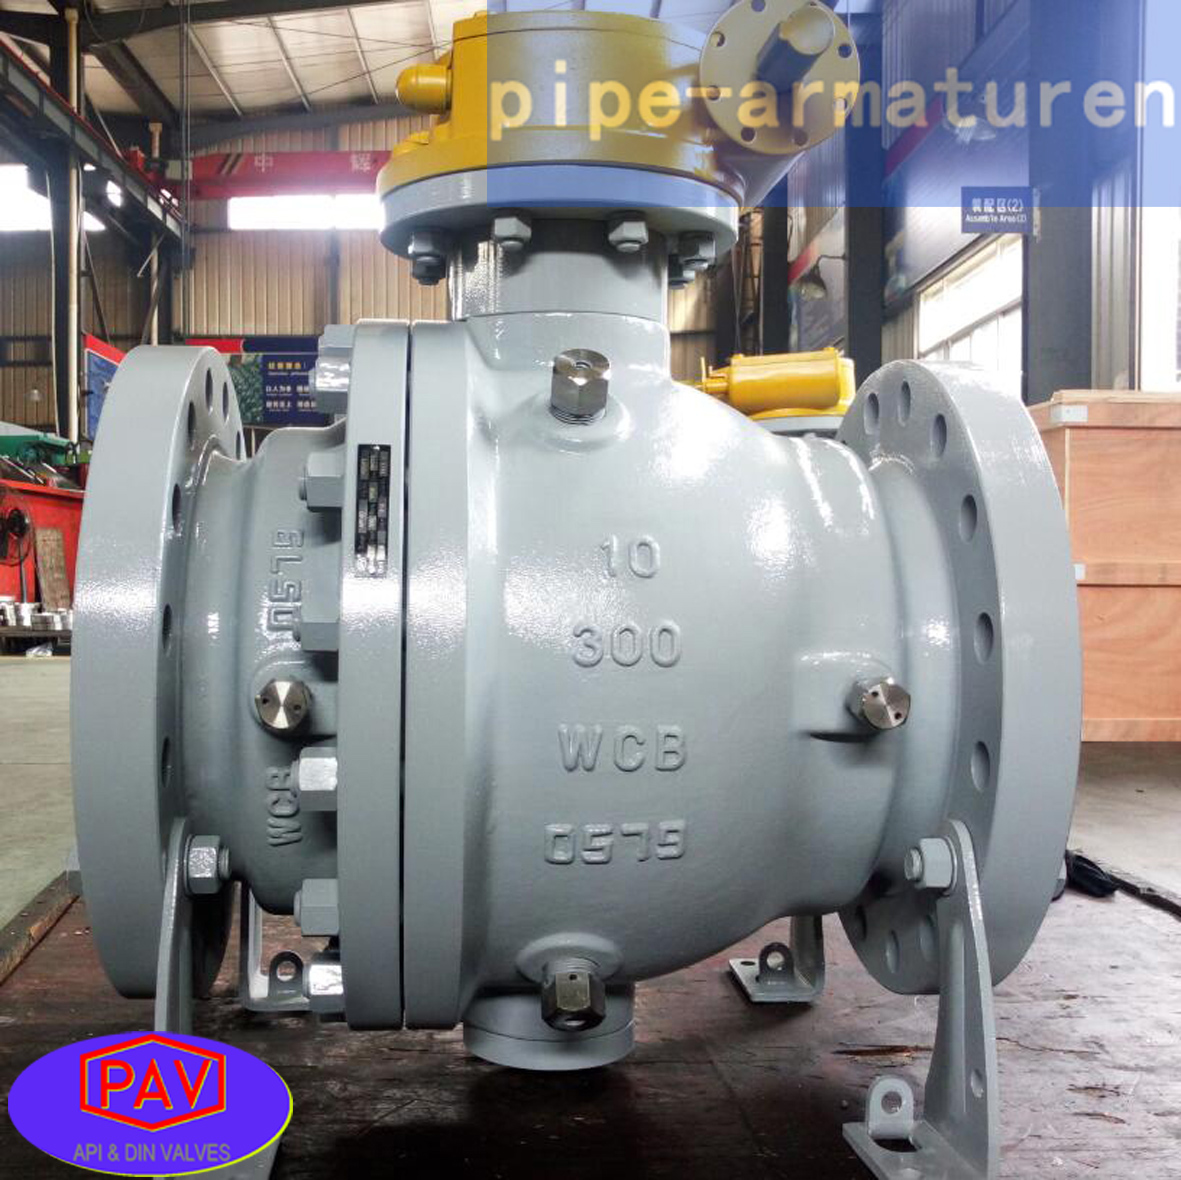 WCB ball valve-PAV VALVE (pipe armaturen)valve manufacturer